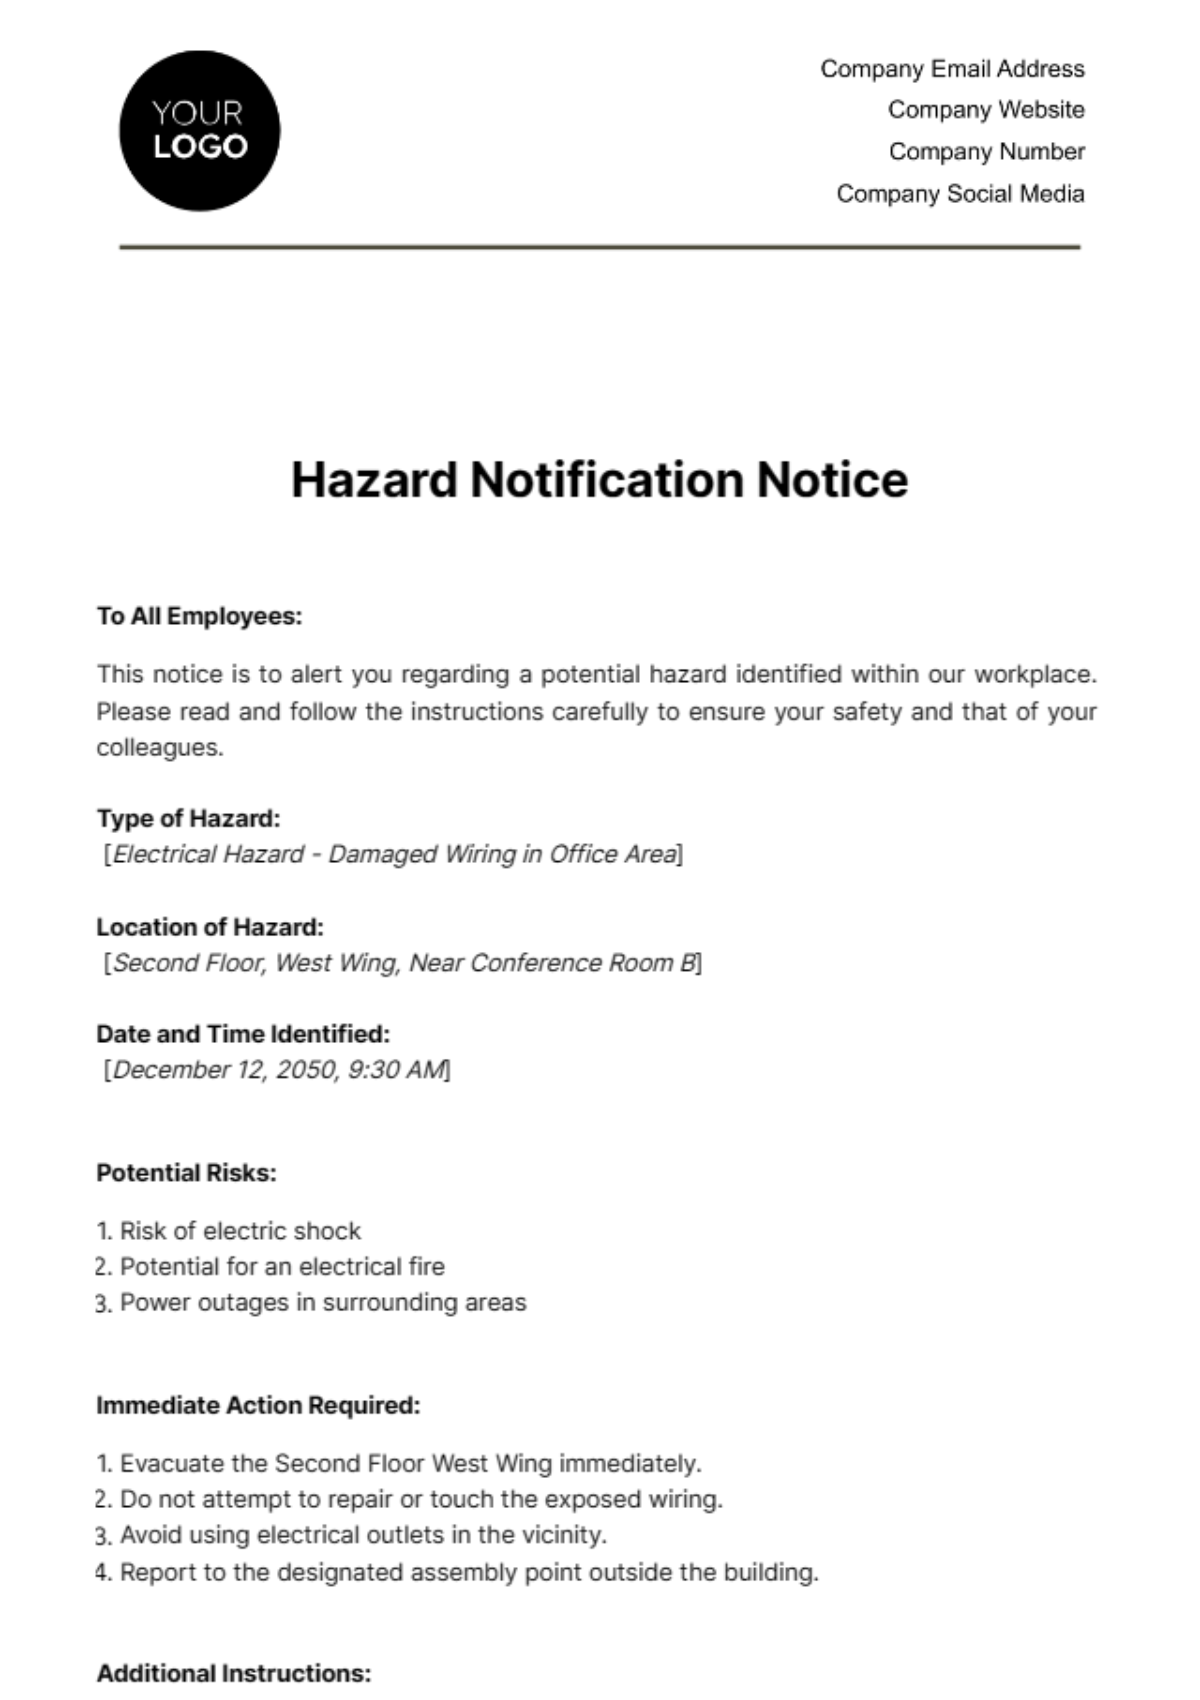 Hazard Notification Notice Template